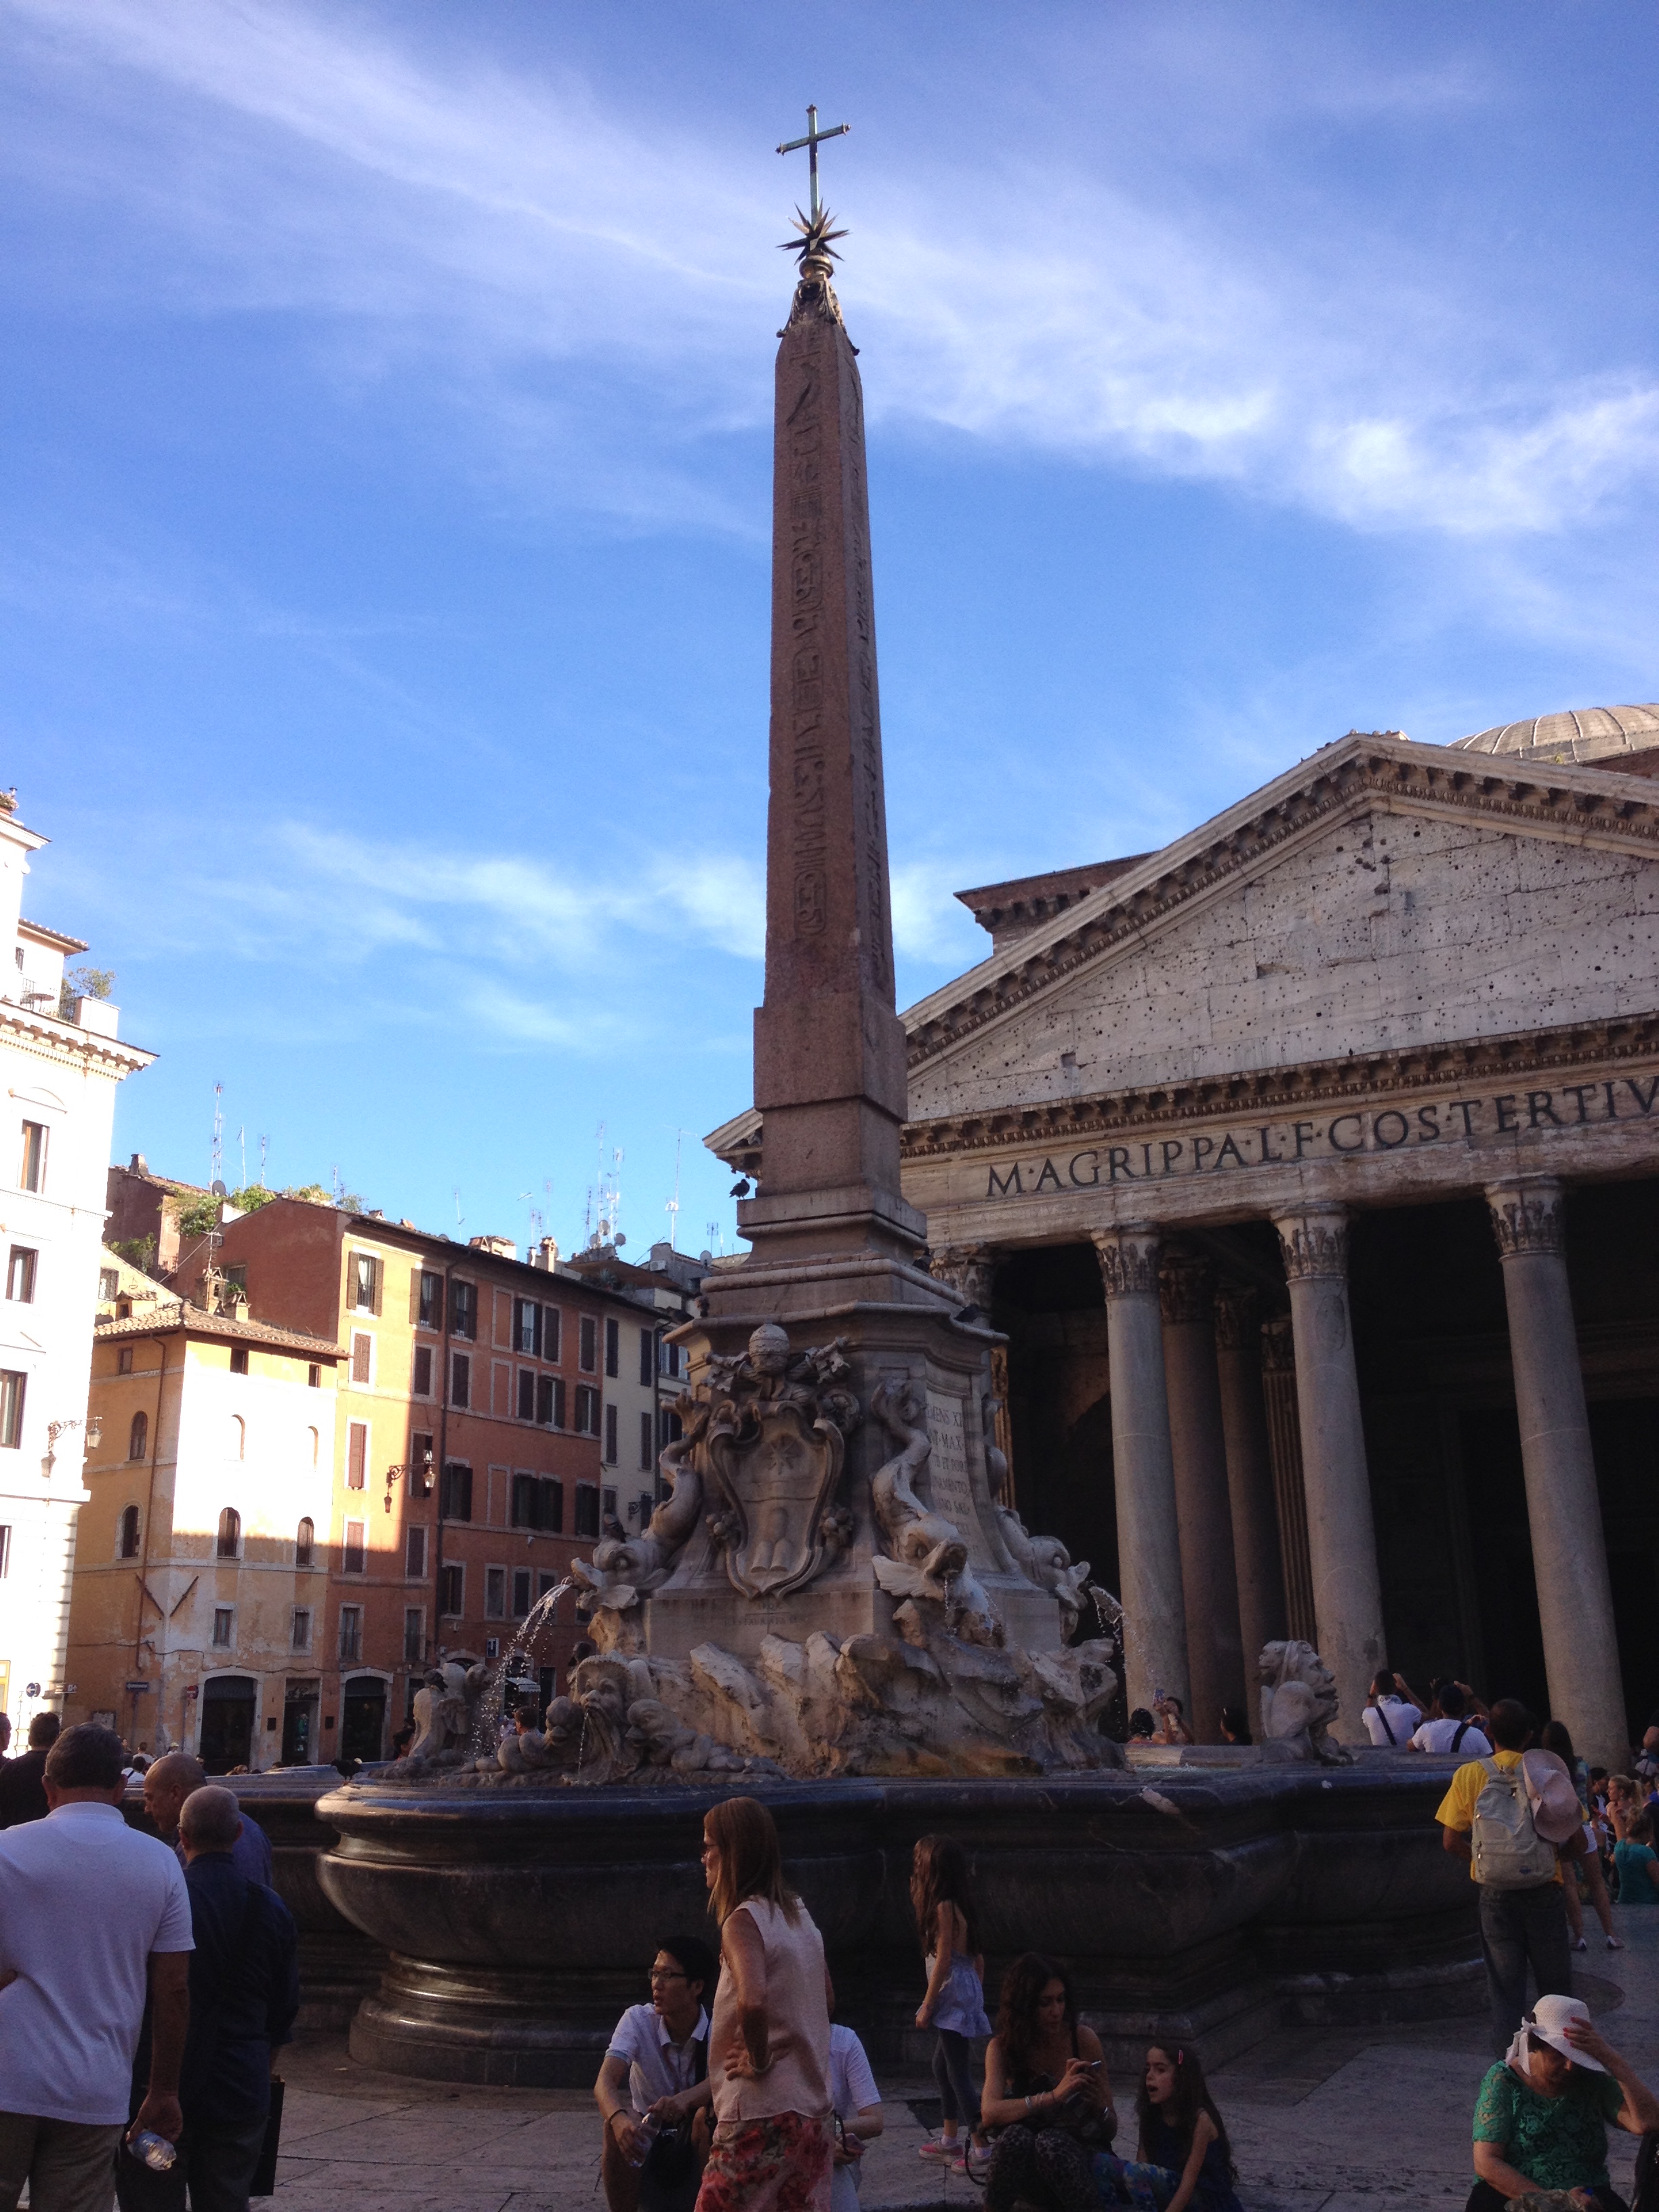 Rome Pantheon square (2)